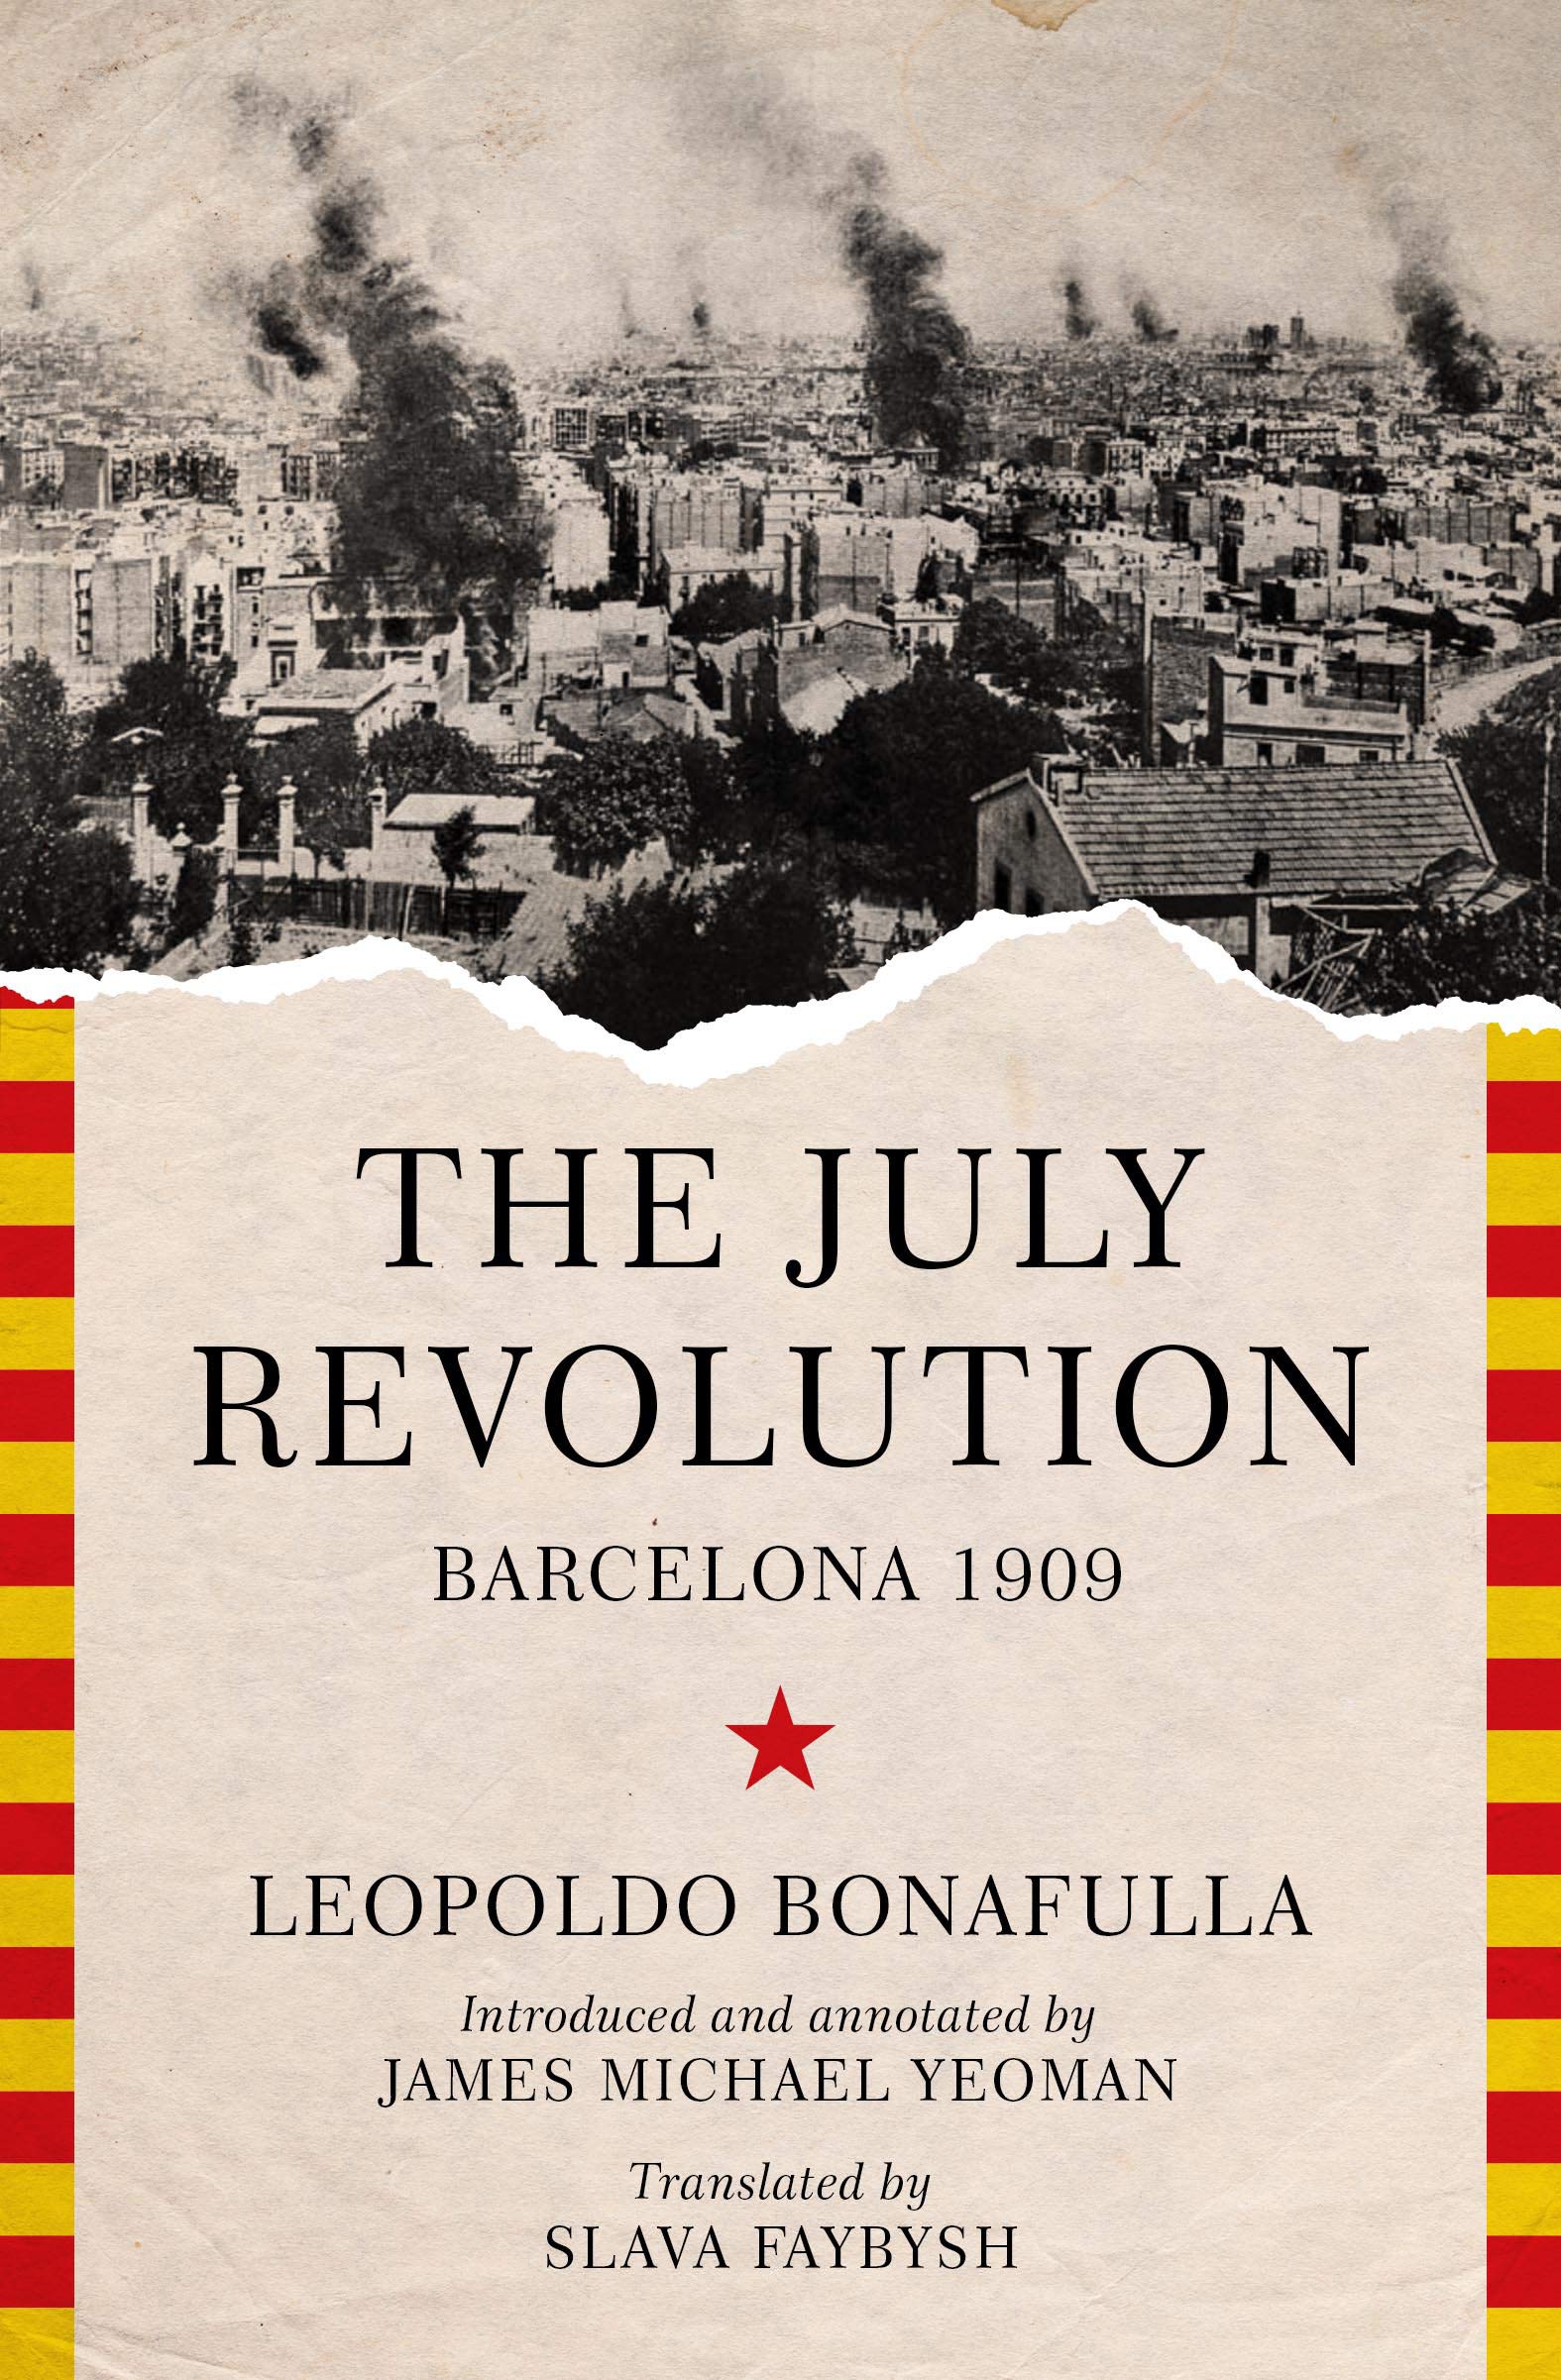 Leopoldo Bonafulla: The July Revolution - Barcelona 1909